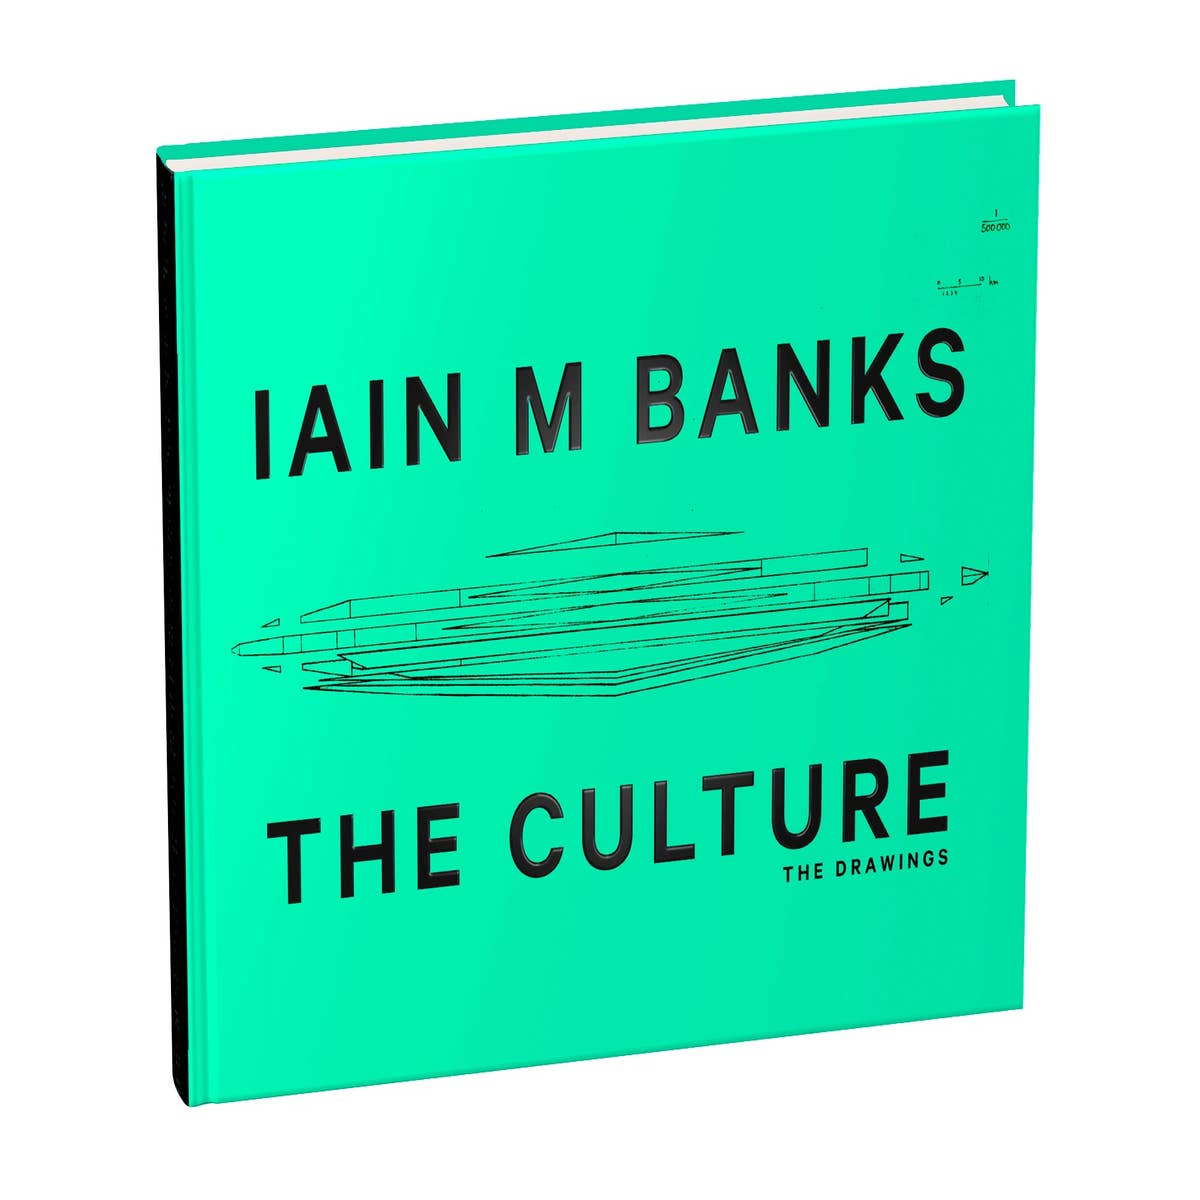 Scottish author Iain Banks dies at 59